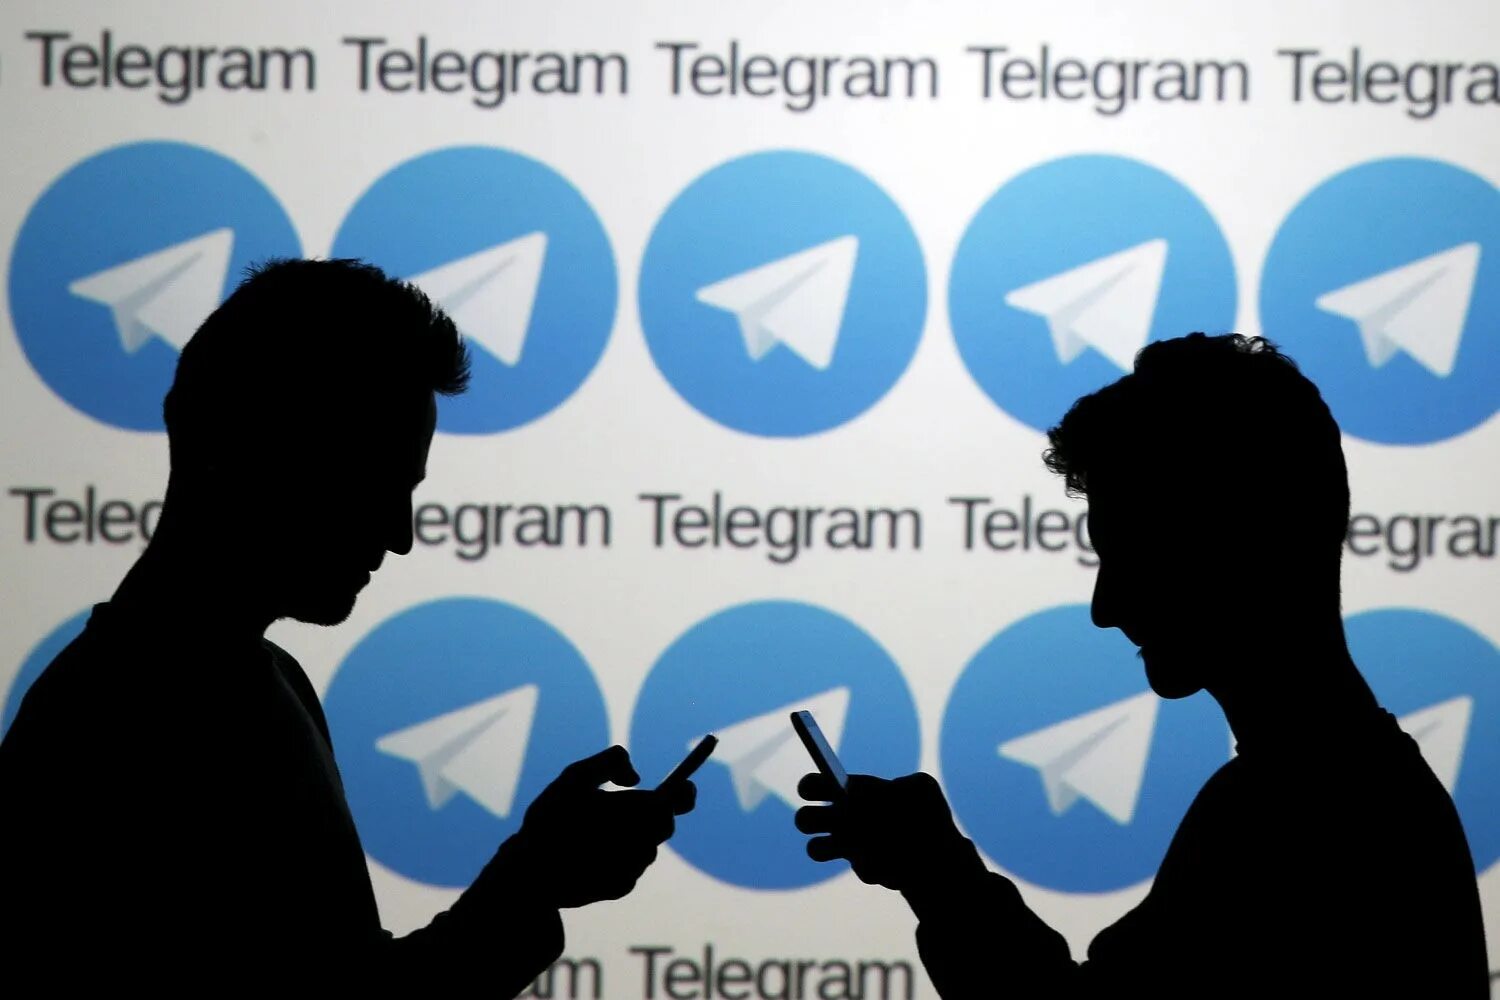 Публичное телеграм. Телеграм. Менеджер телеграм. Рекламный менеджер телеграм. Контент менеджер в телеграмм.